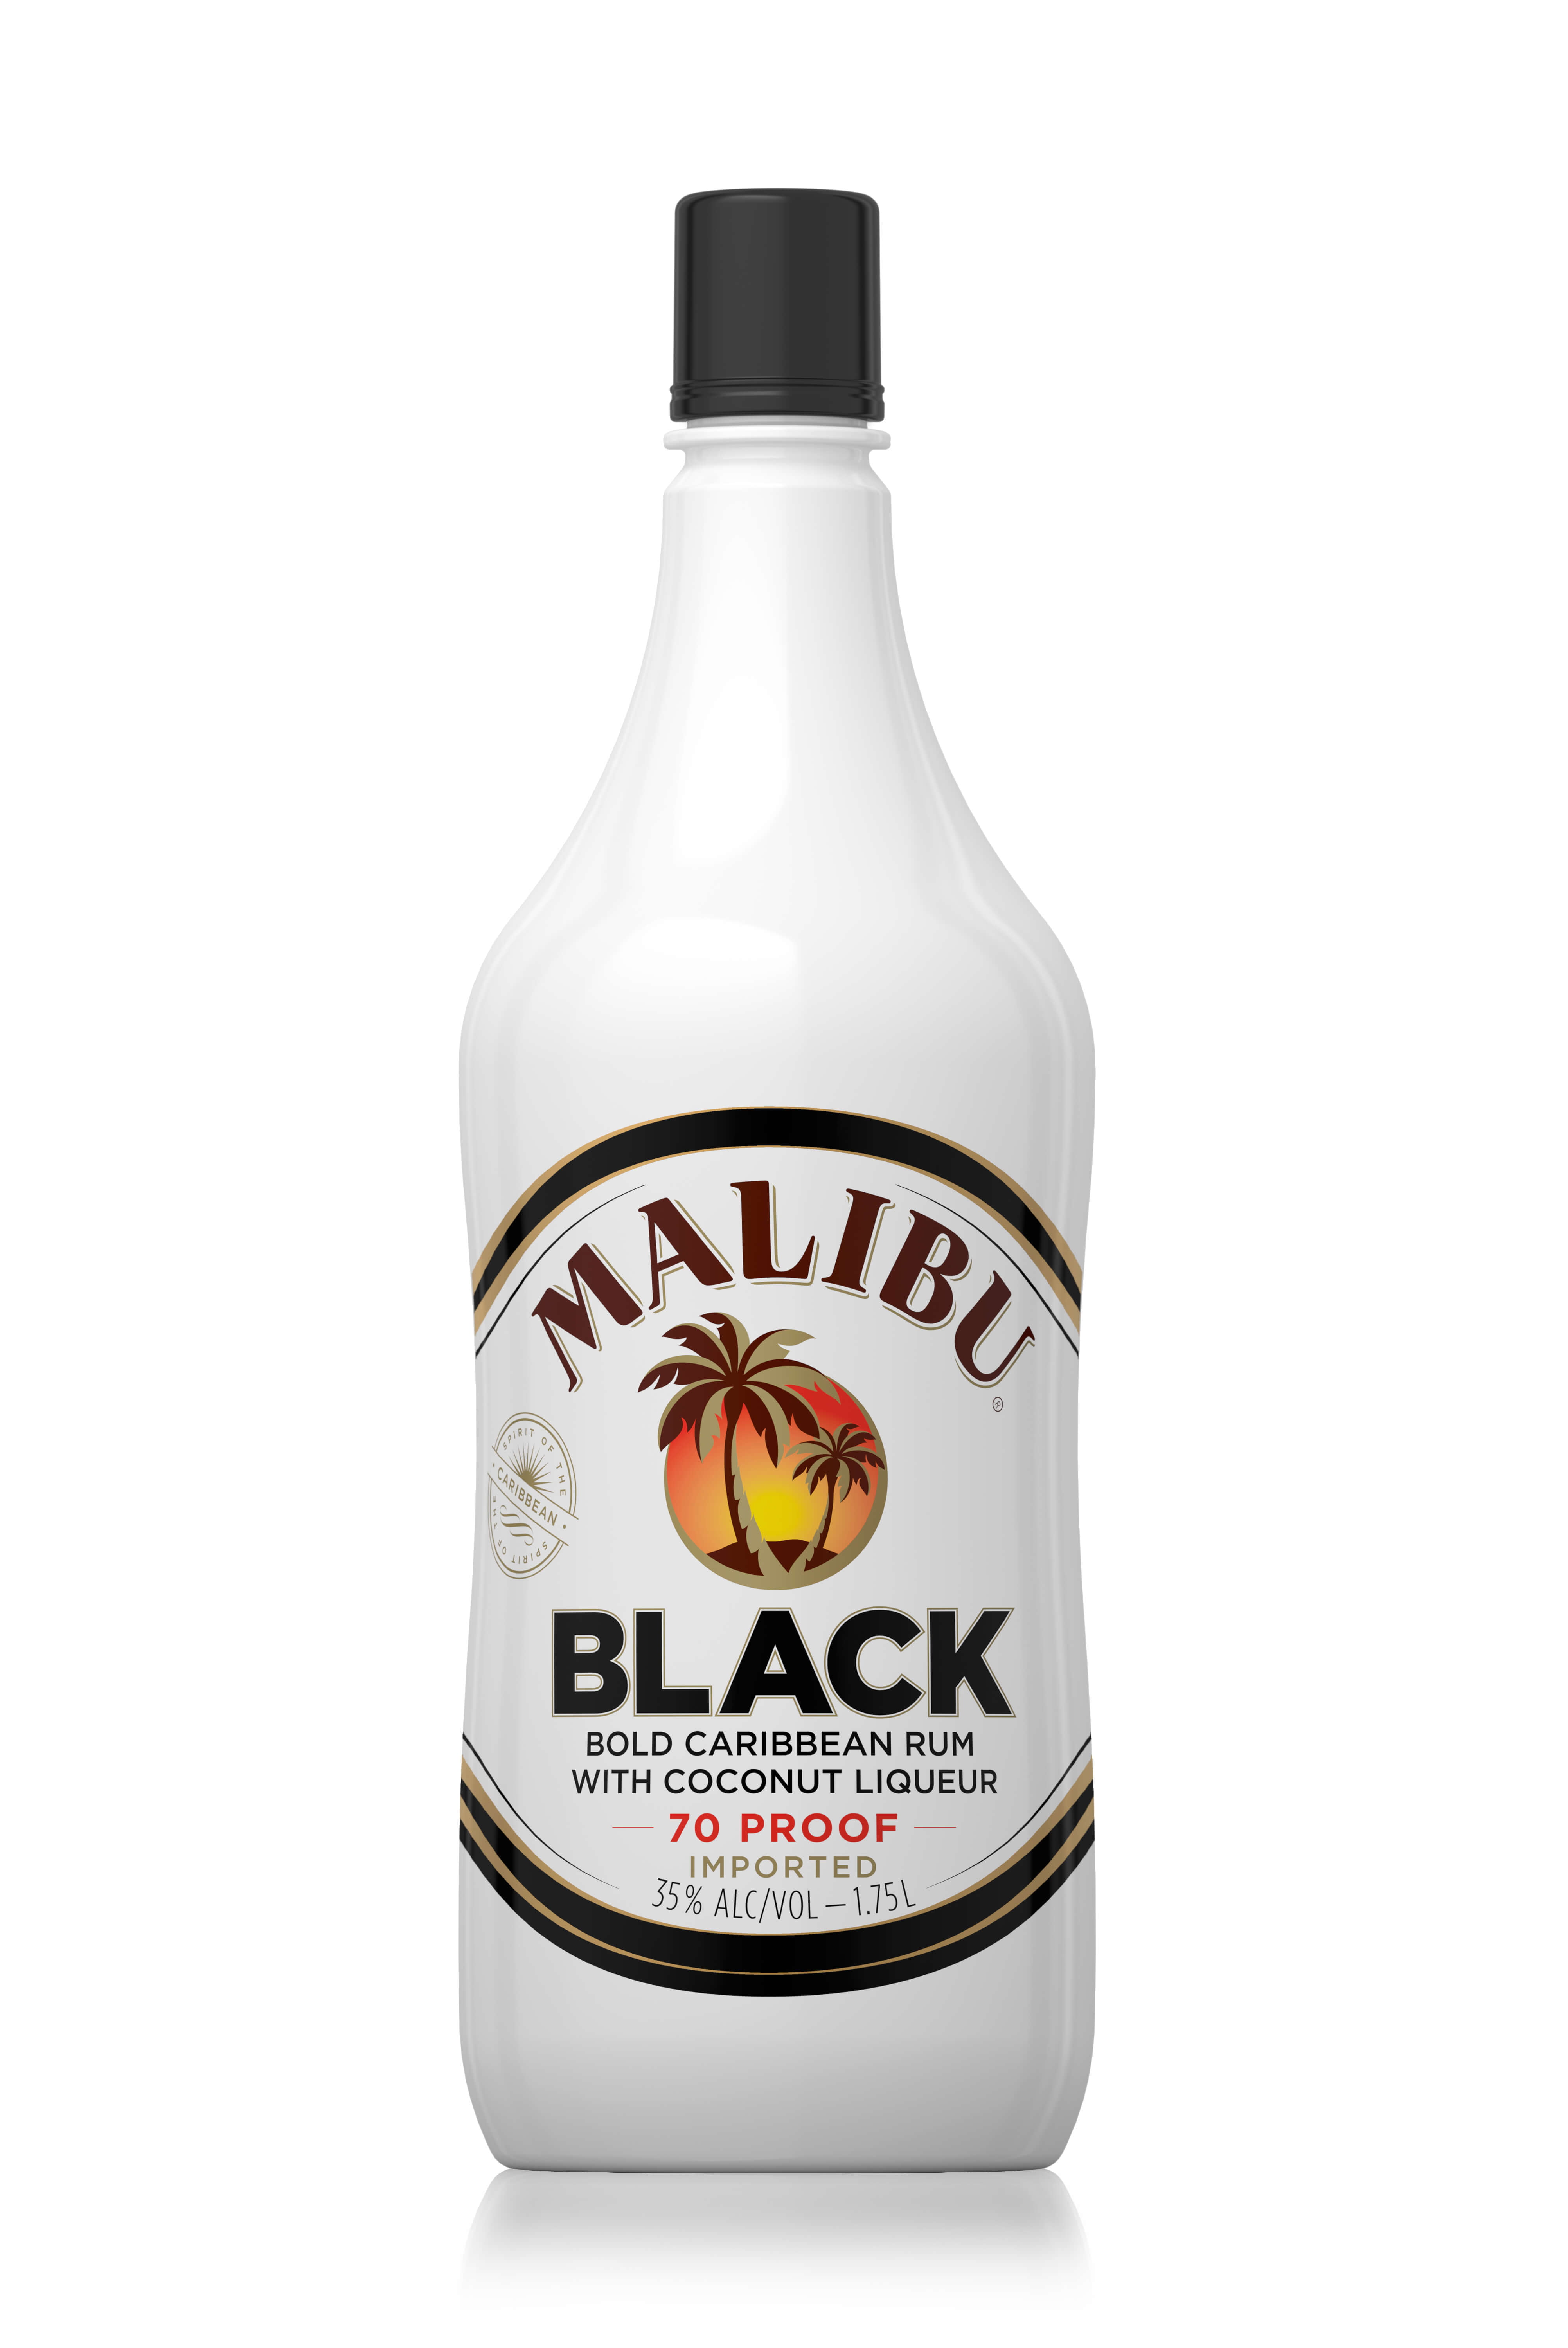 Malibu Rum Caribbean Black 1.75L Bottle - Walmart.com - Walmart.com